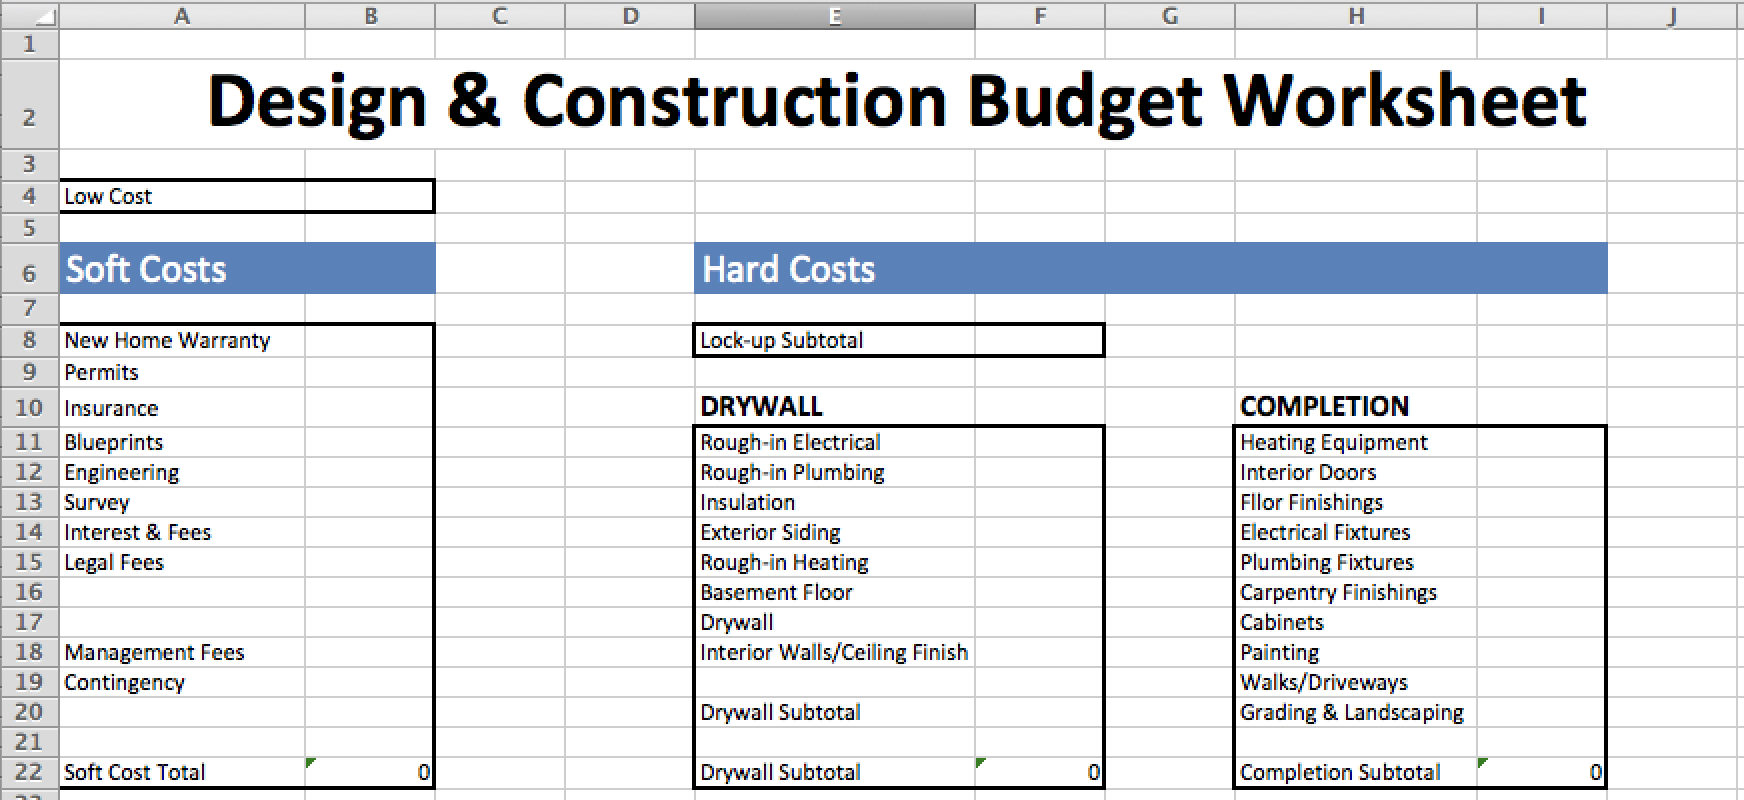 11 Best Design Construction Cost Estimation Methods  Fohlio Within Restaurant Construction Budget Template With Restaurant Construction Budget Template